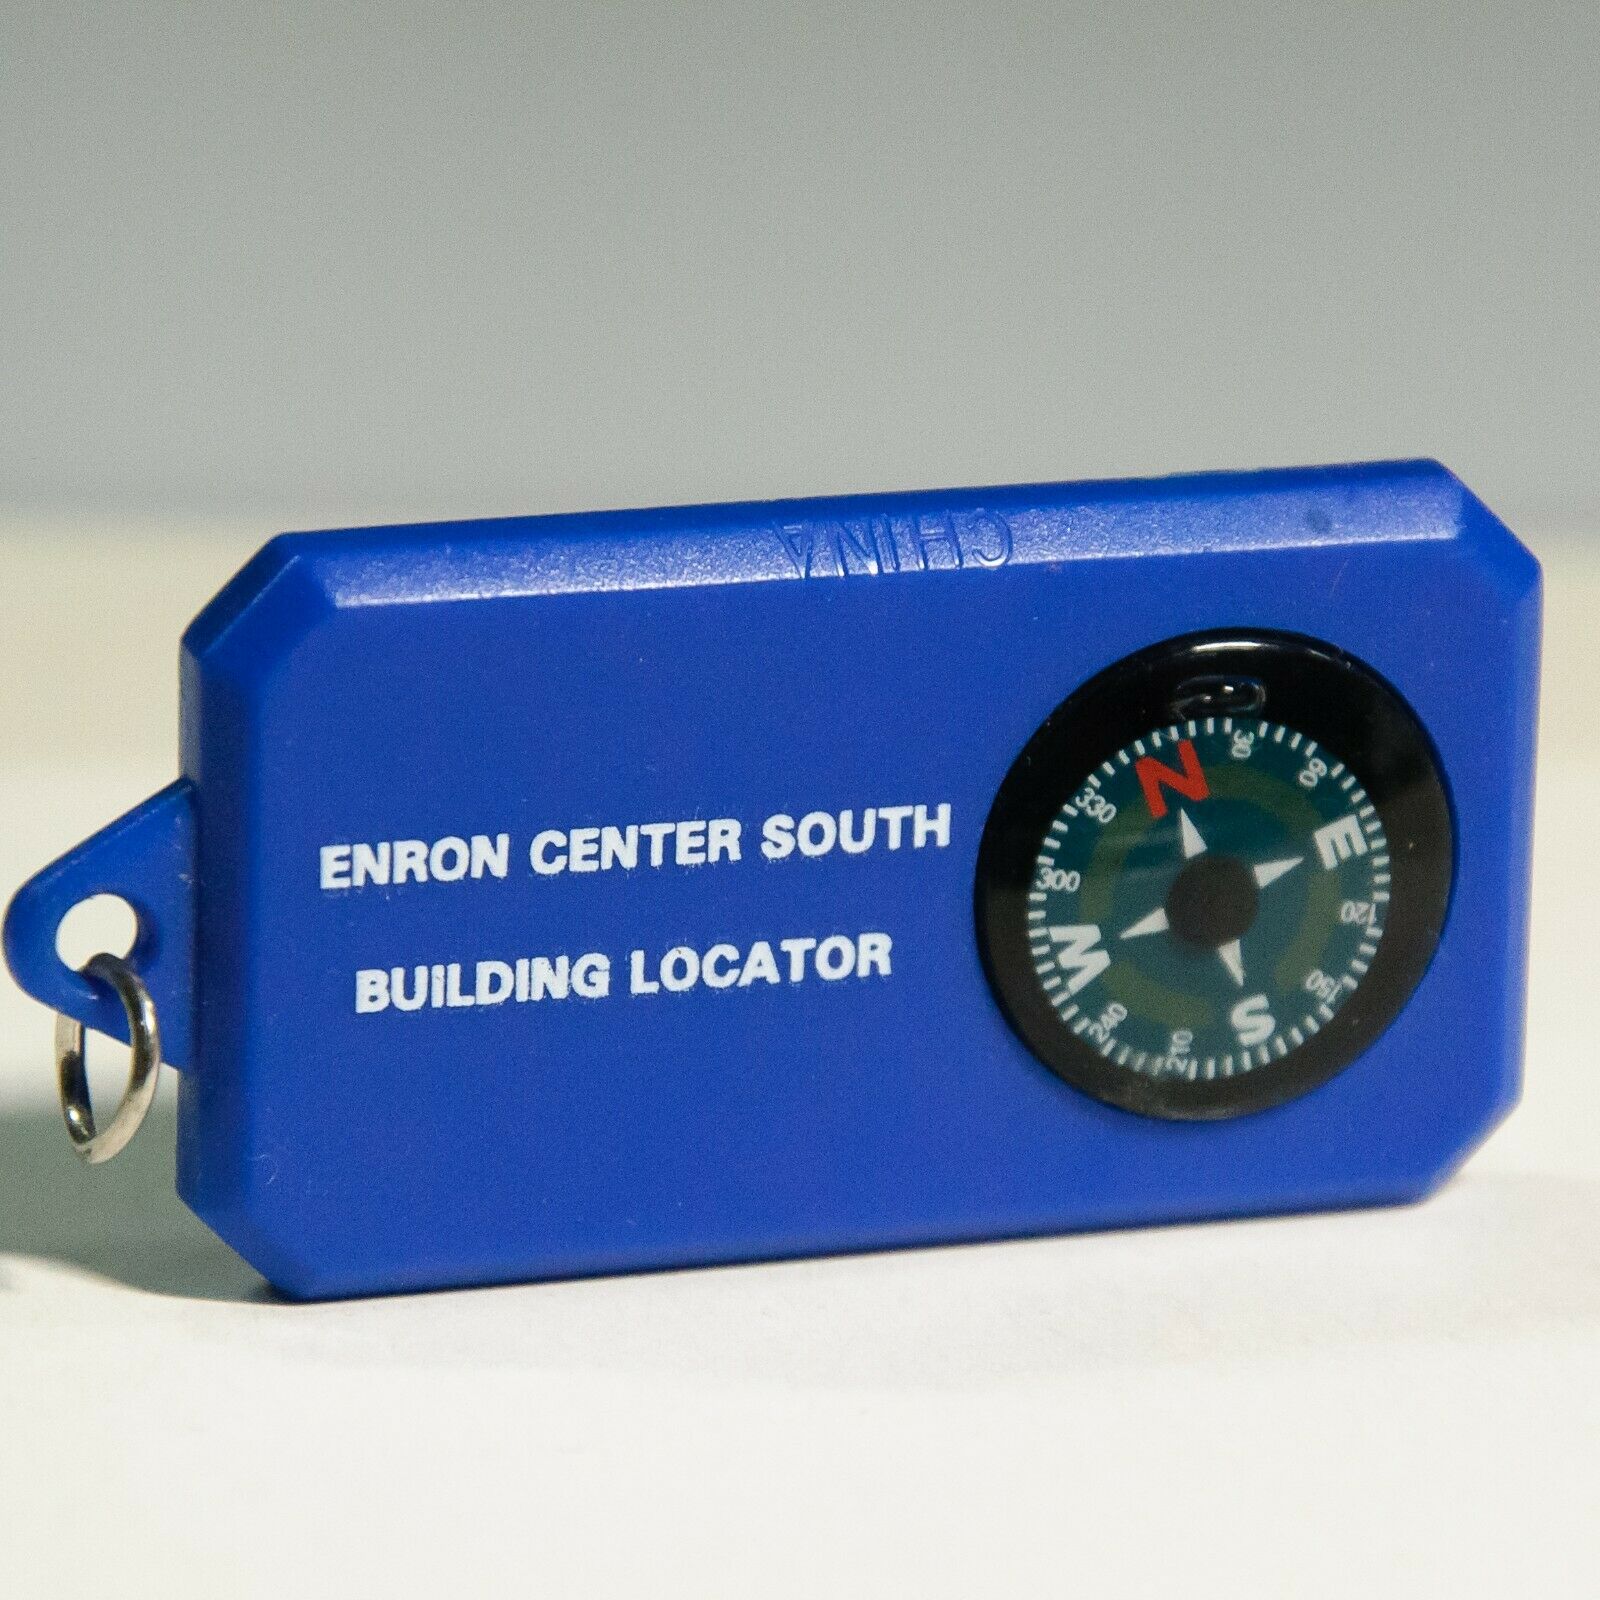 Enron Collectable – Enron Center South Building Locater, Key Ring Fob Compass